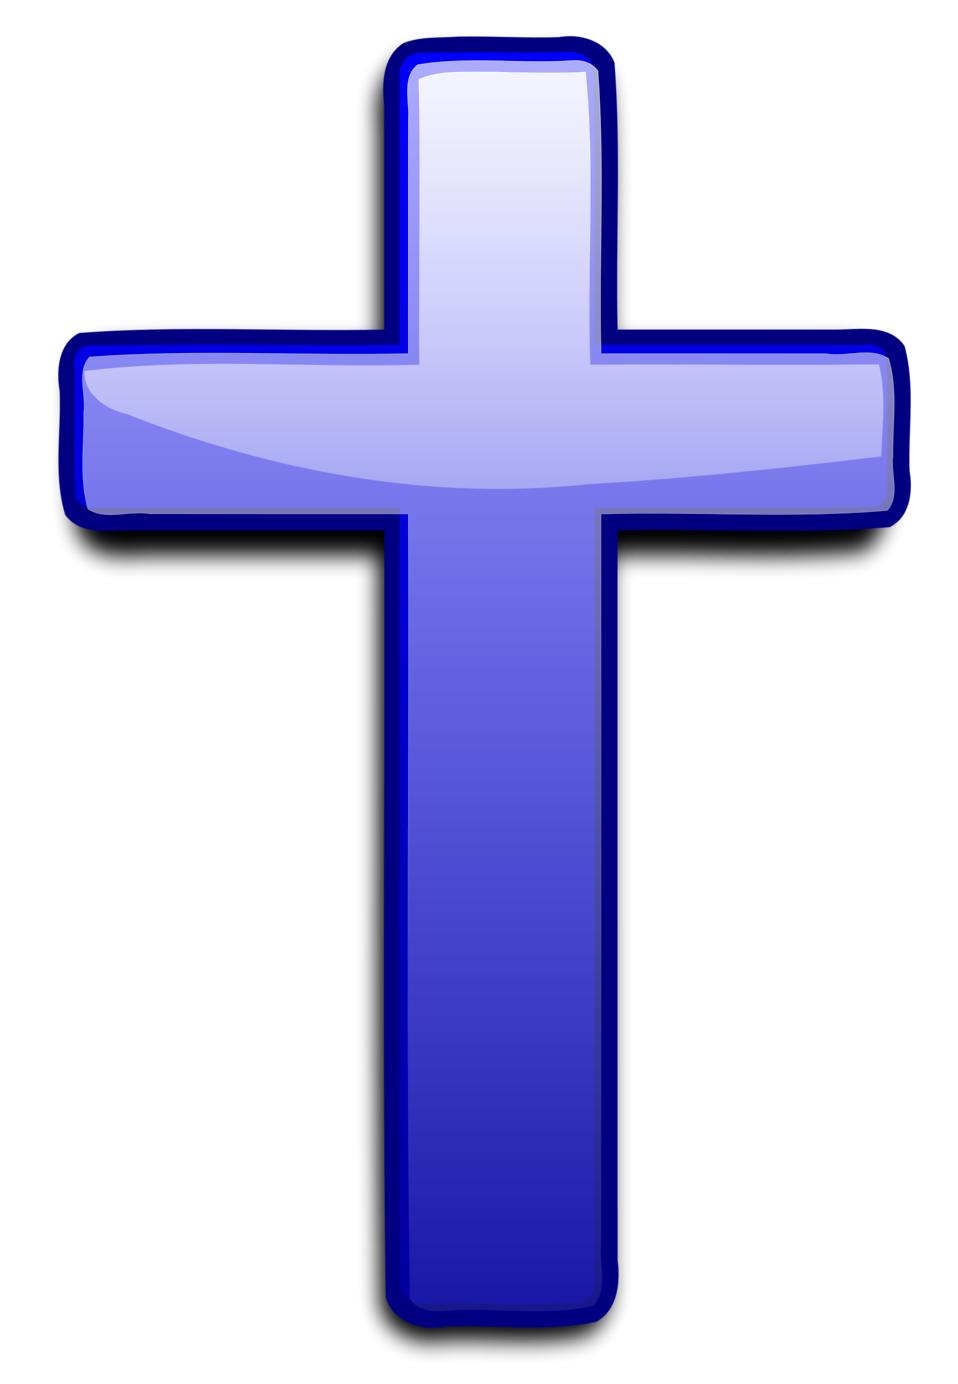 Cross   Free Stock Photo   Illustration Of A Blue Cross     16544